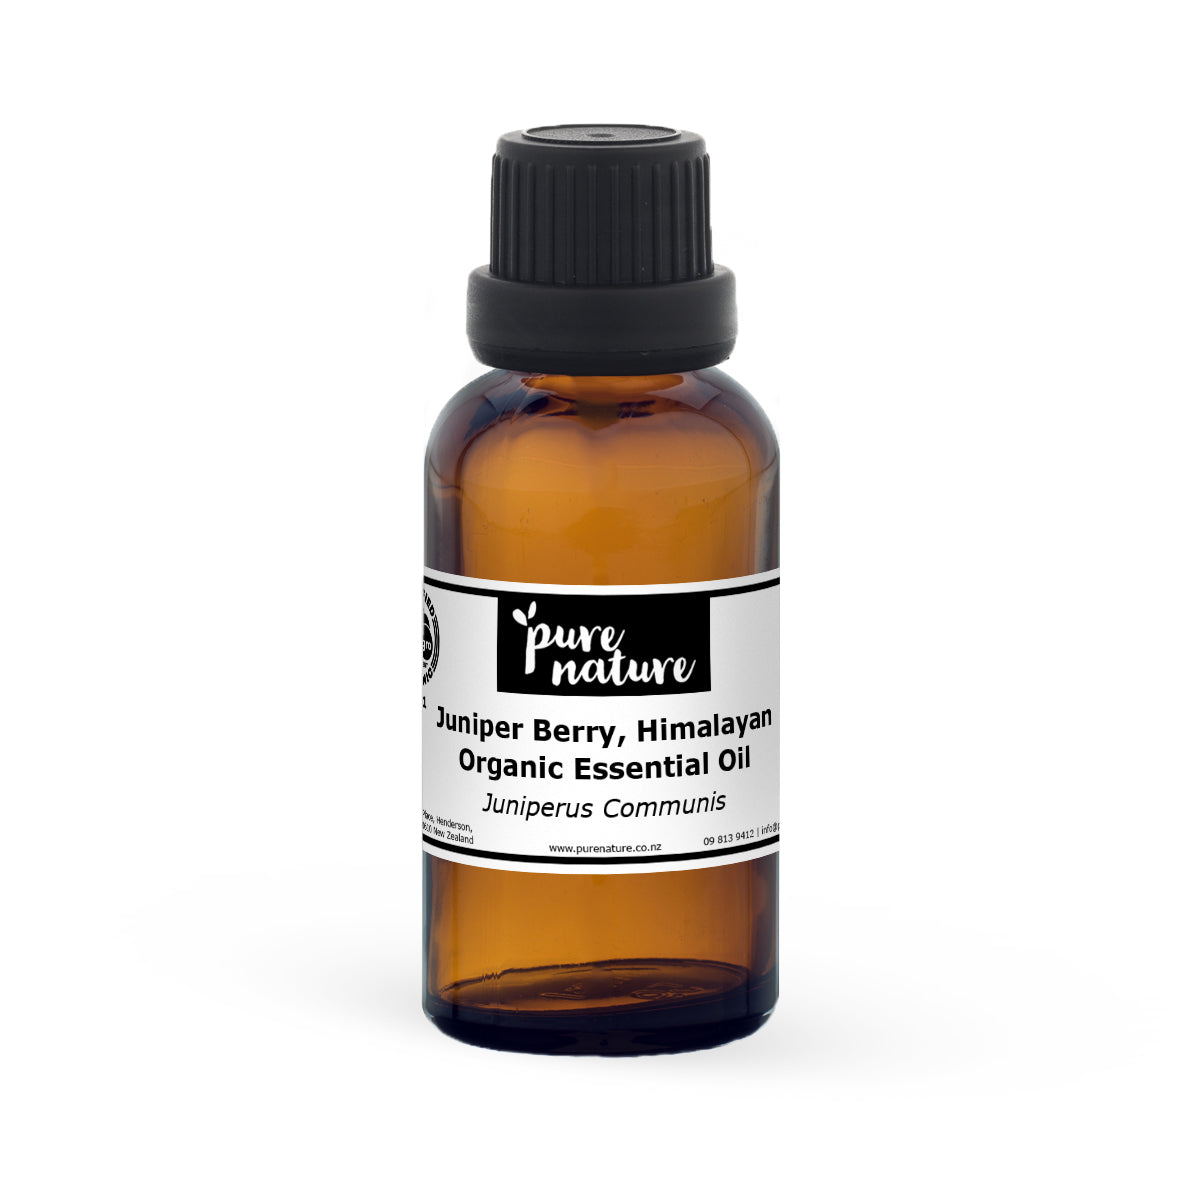 Juniper Berry, Himalayan - Organic Essential Oil